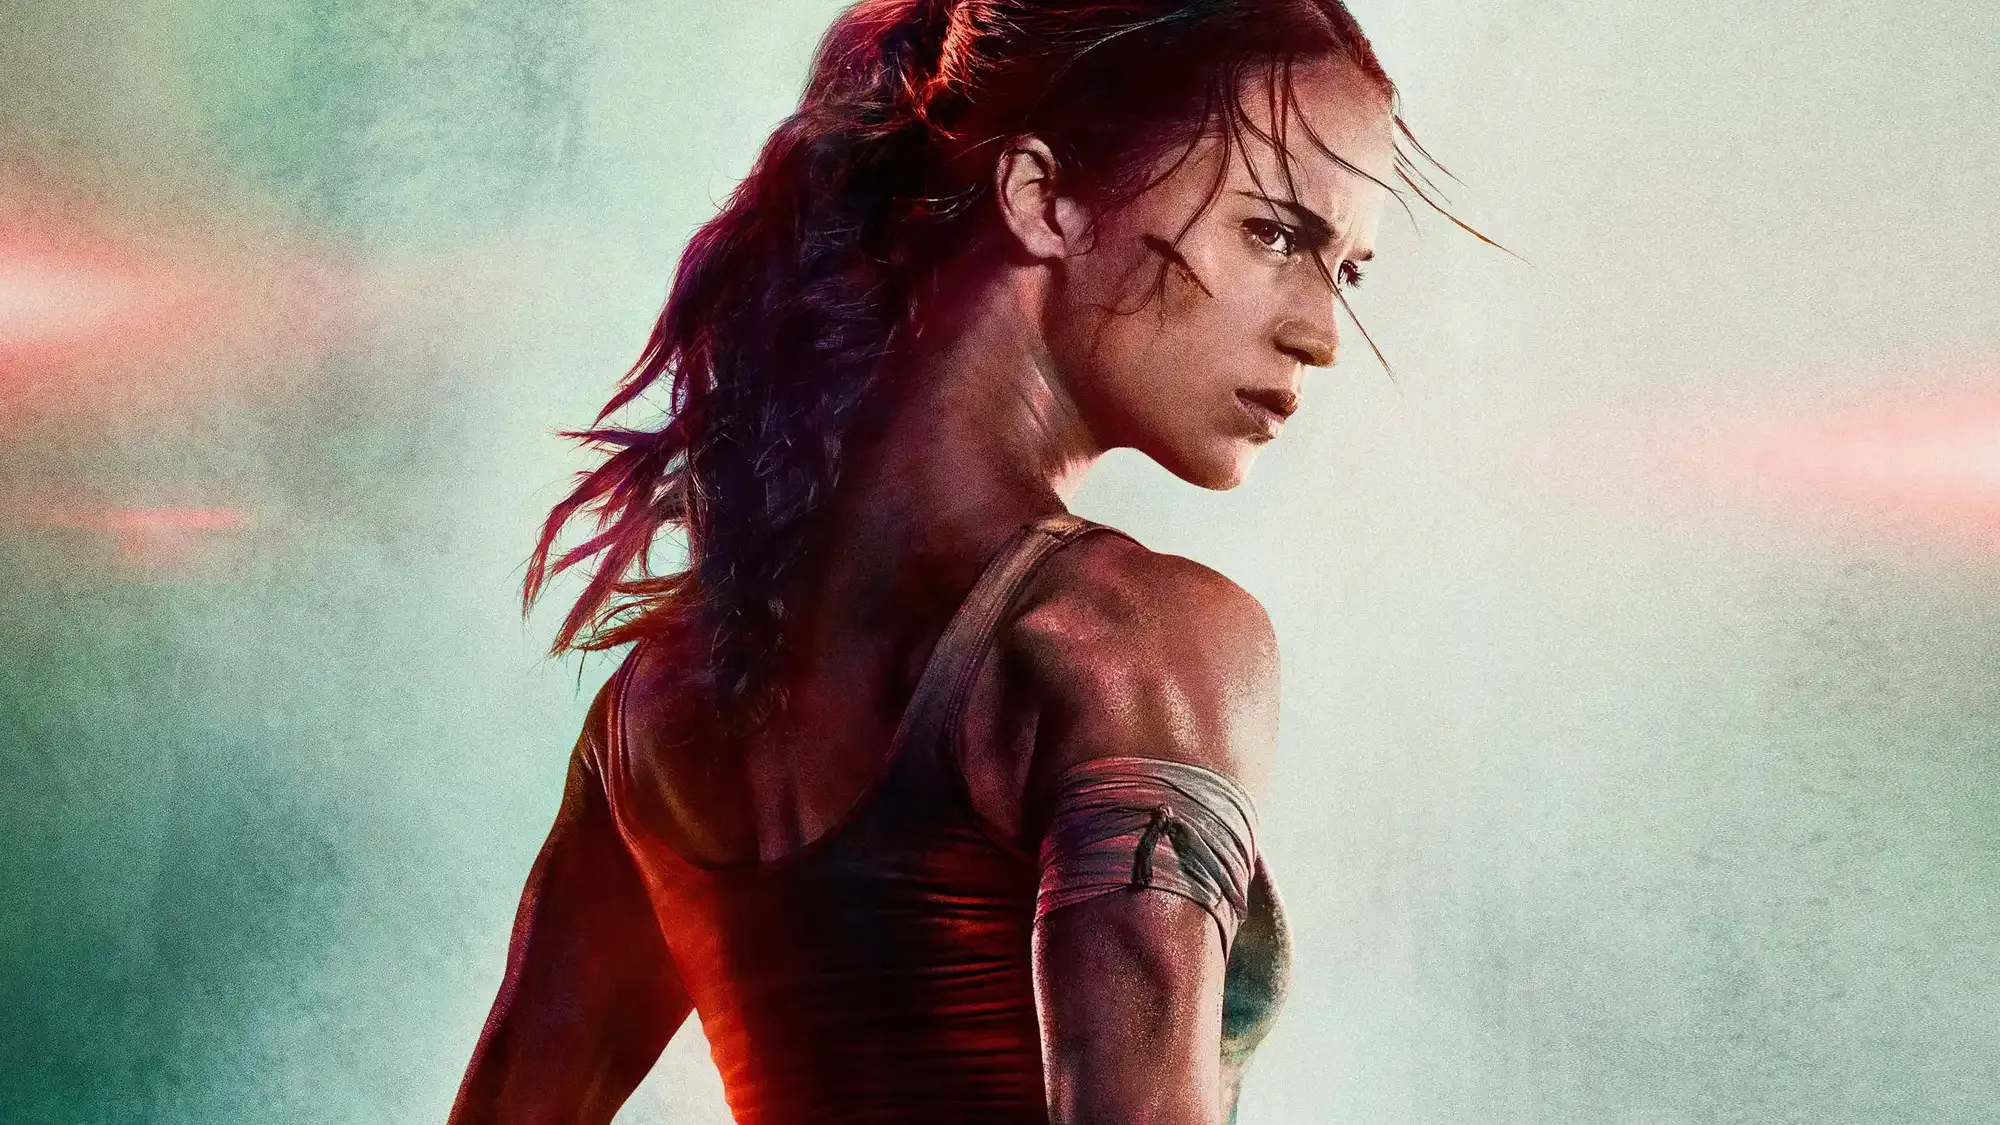 Tomb Raider movie review